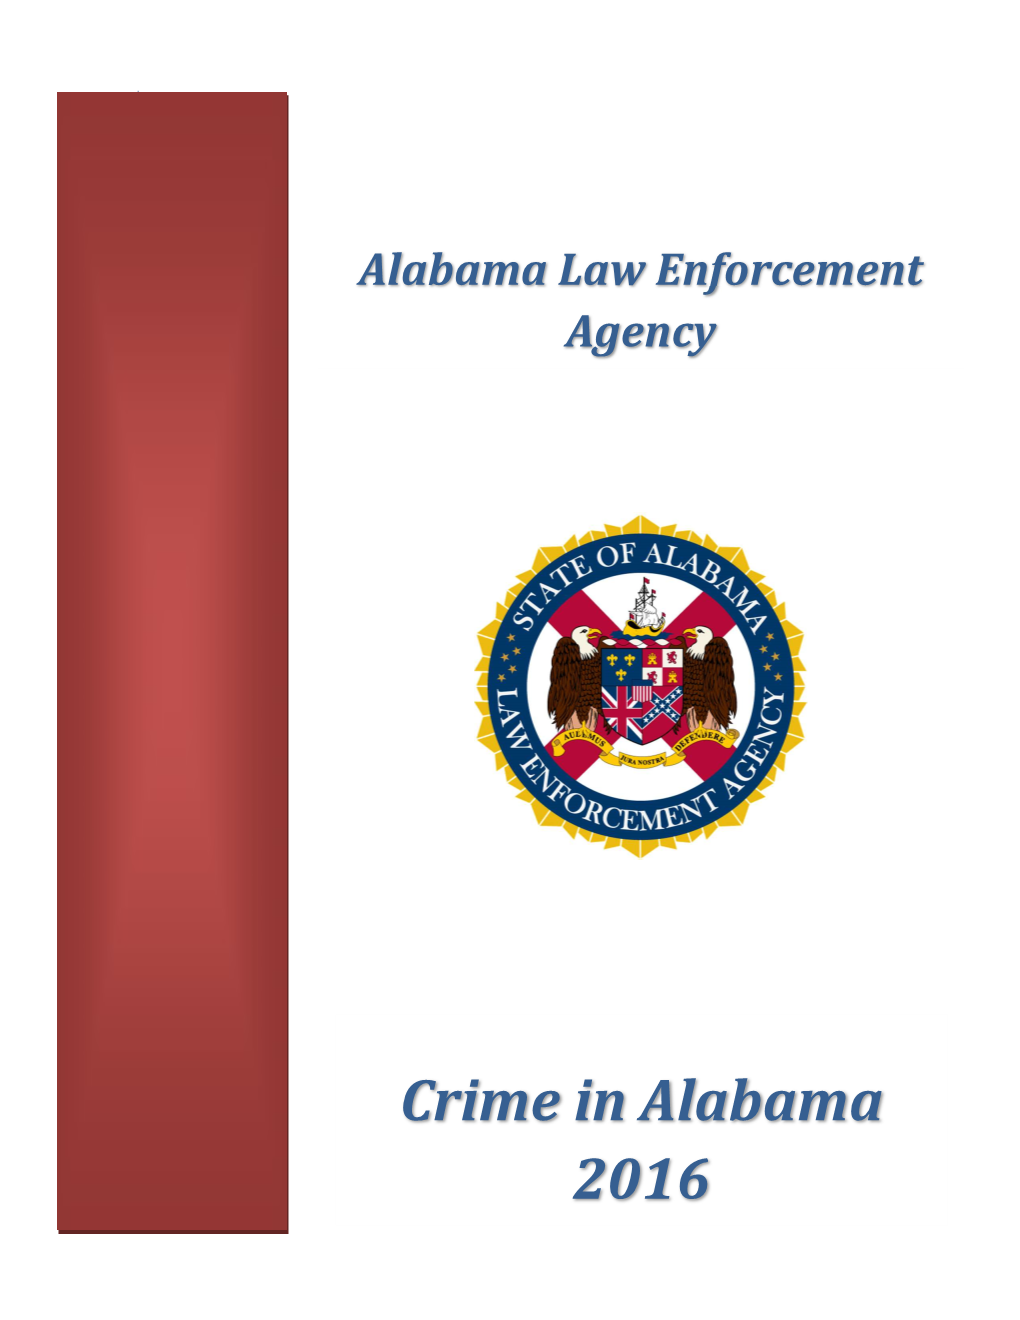 Crime in Alabama 2016